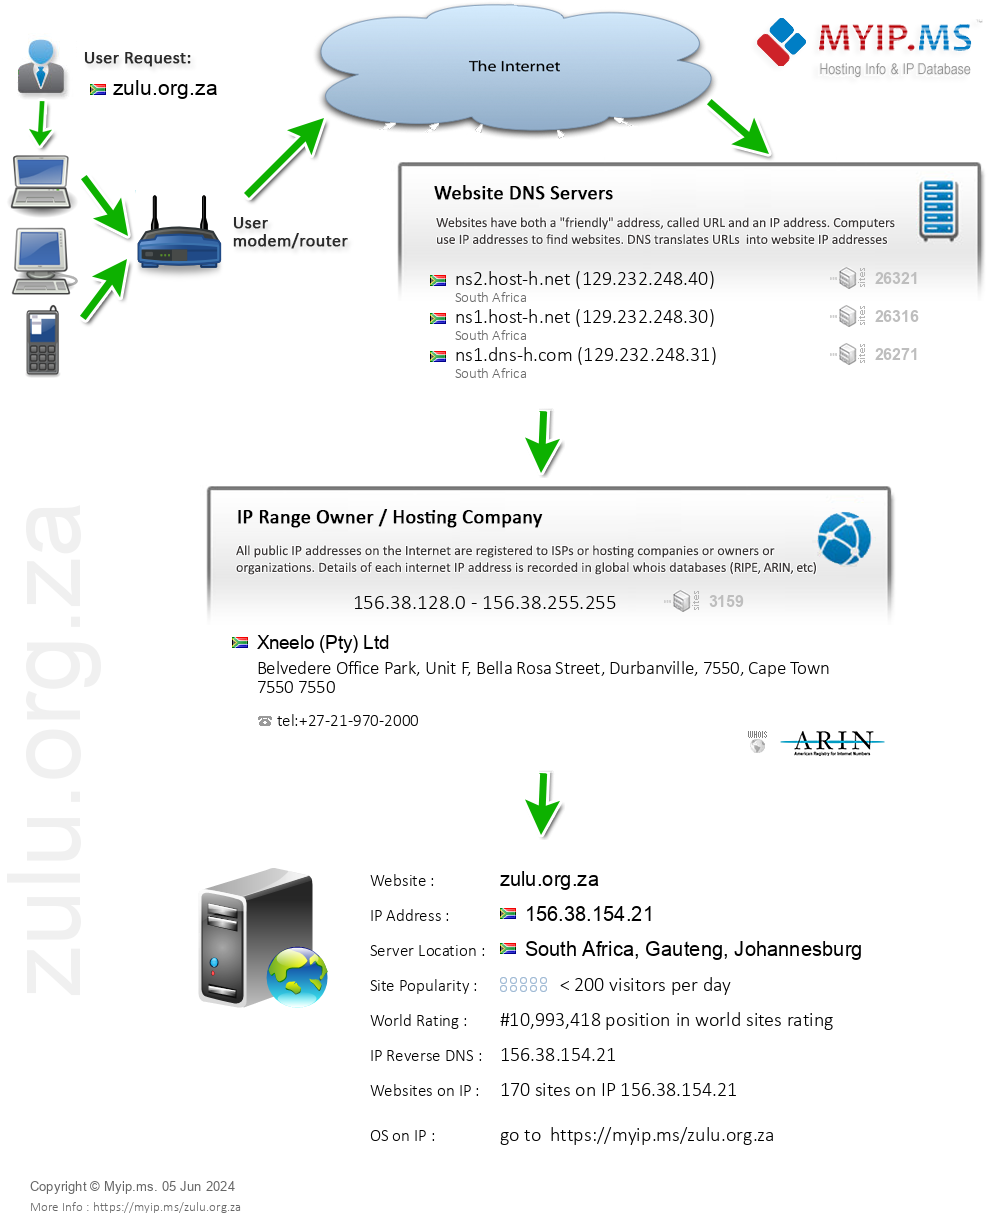 Zulu.org.za - Website Hosting Visual IP Diagram